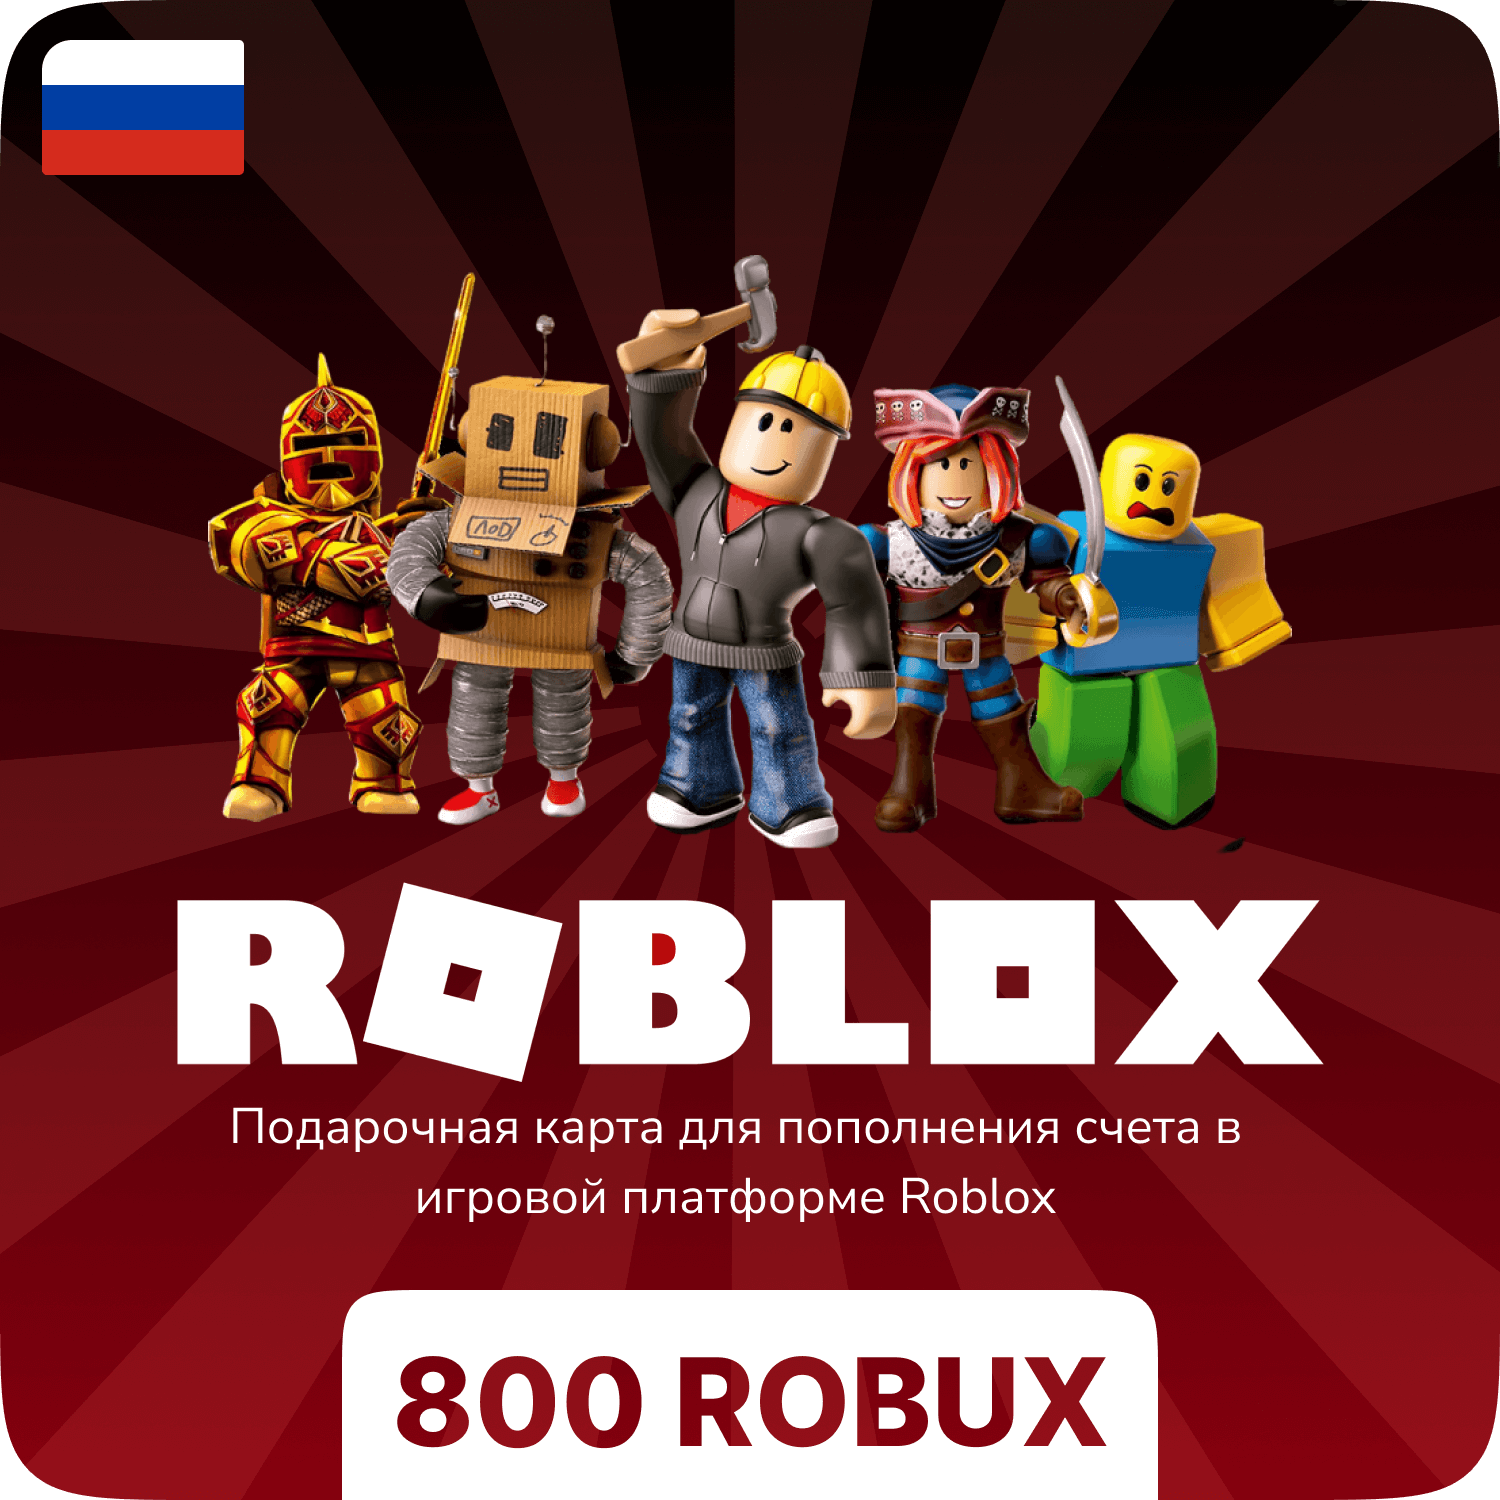 Подарочная карта Roblox - 800 Robux